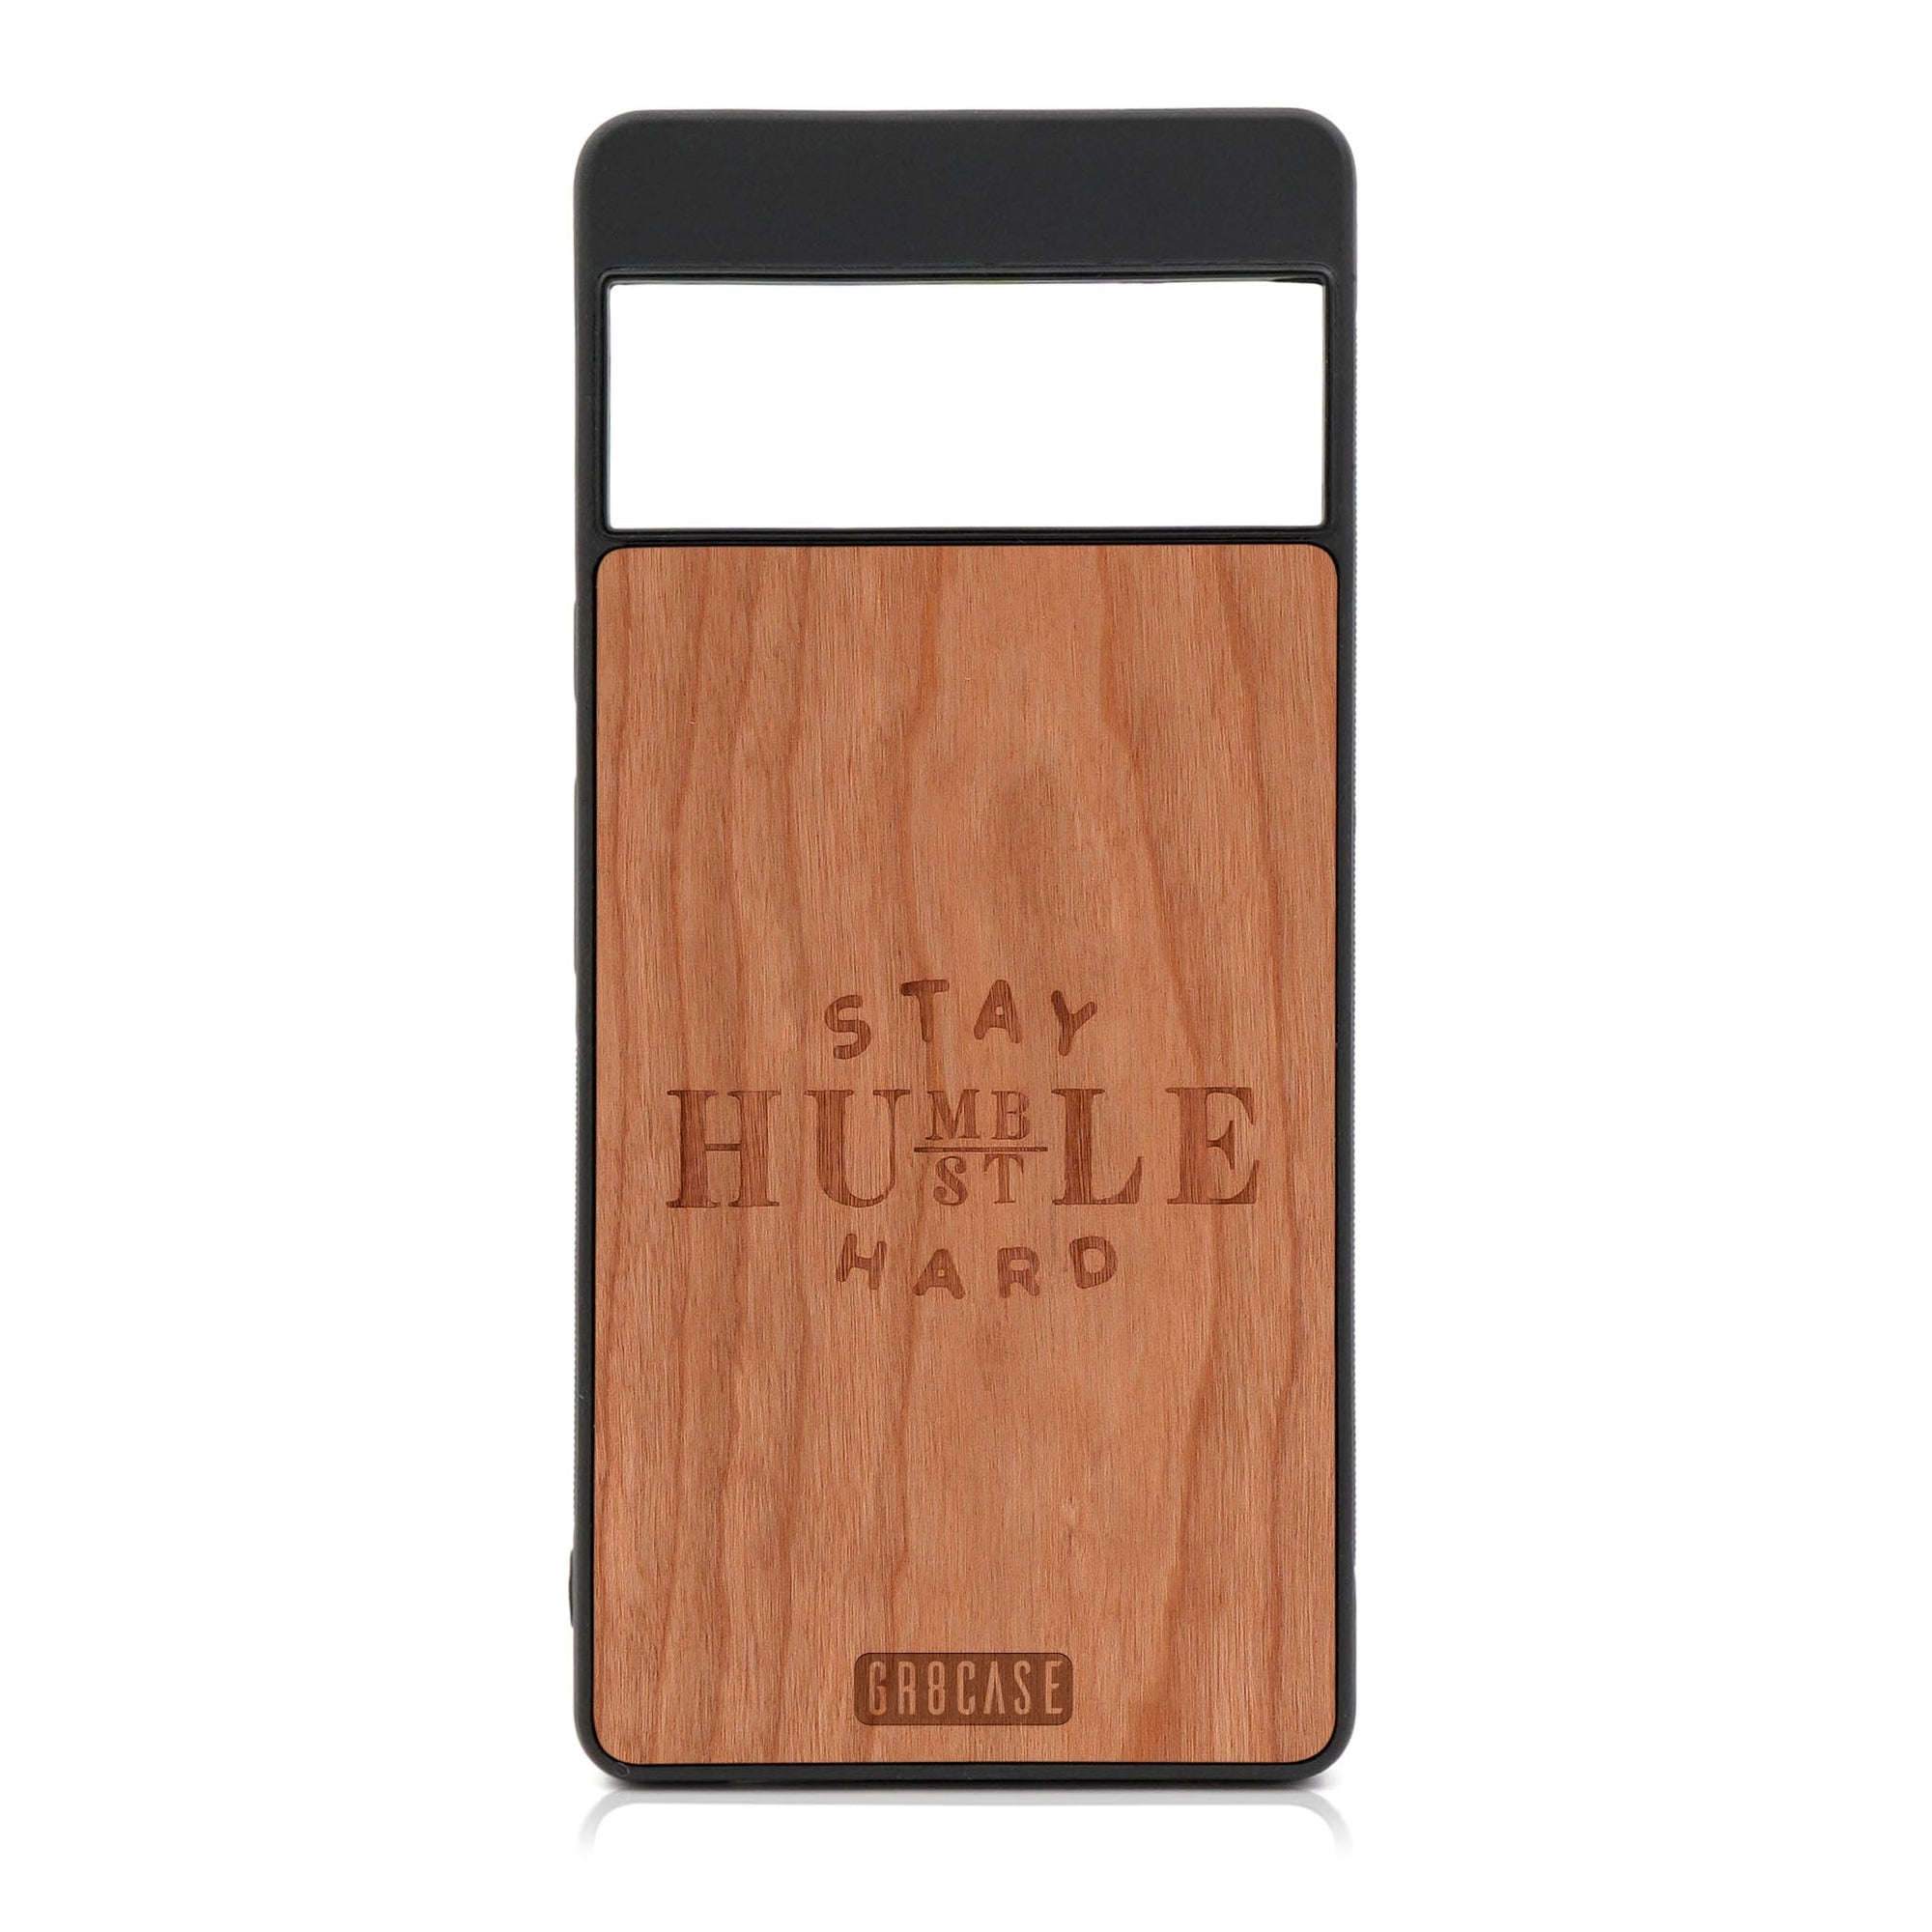 Stay Humble Hustle Hard Design Wood Case For Google Pixel 6A